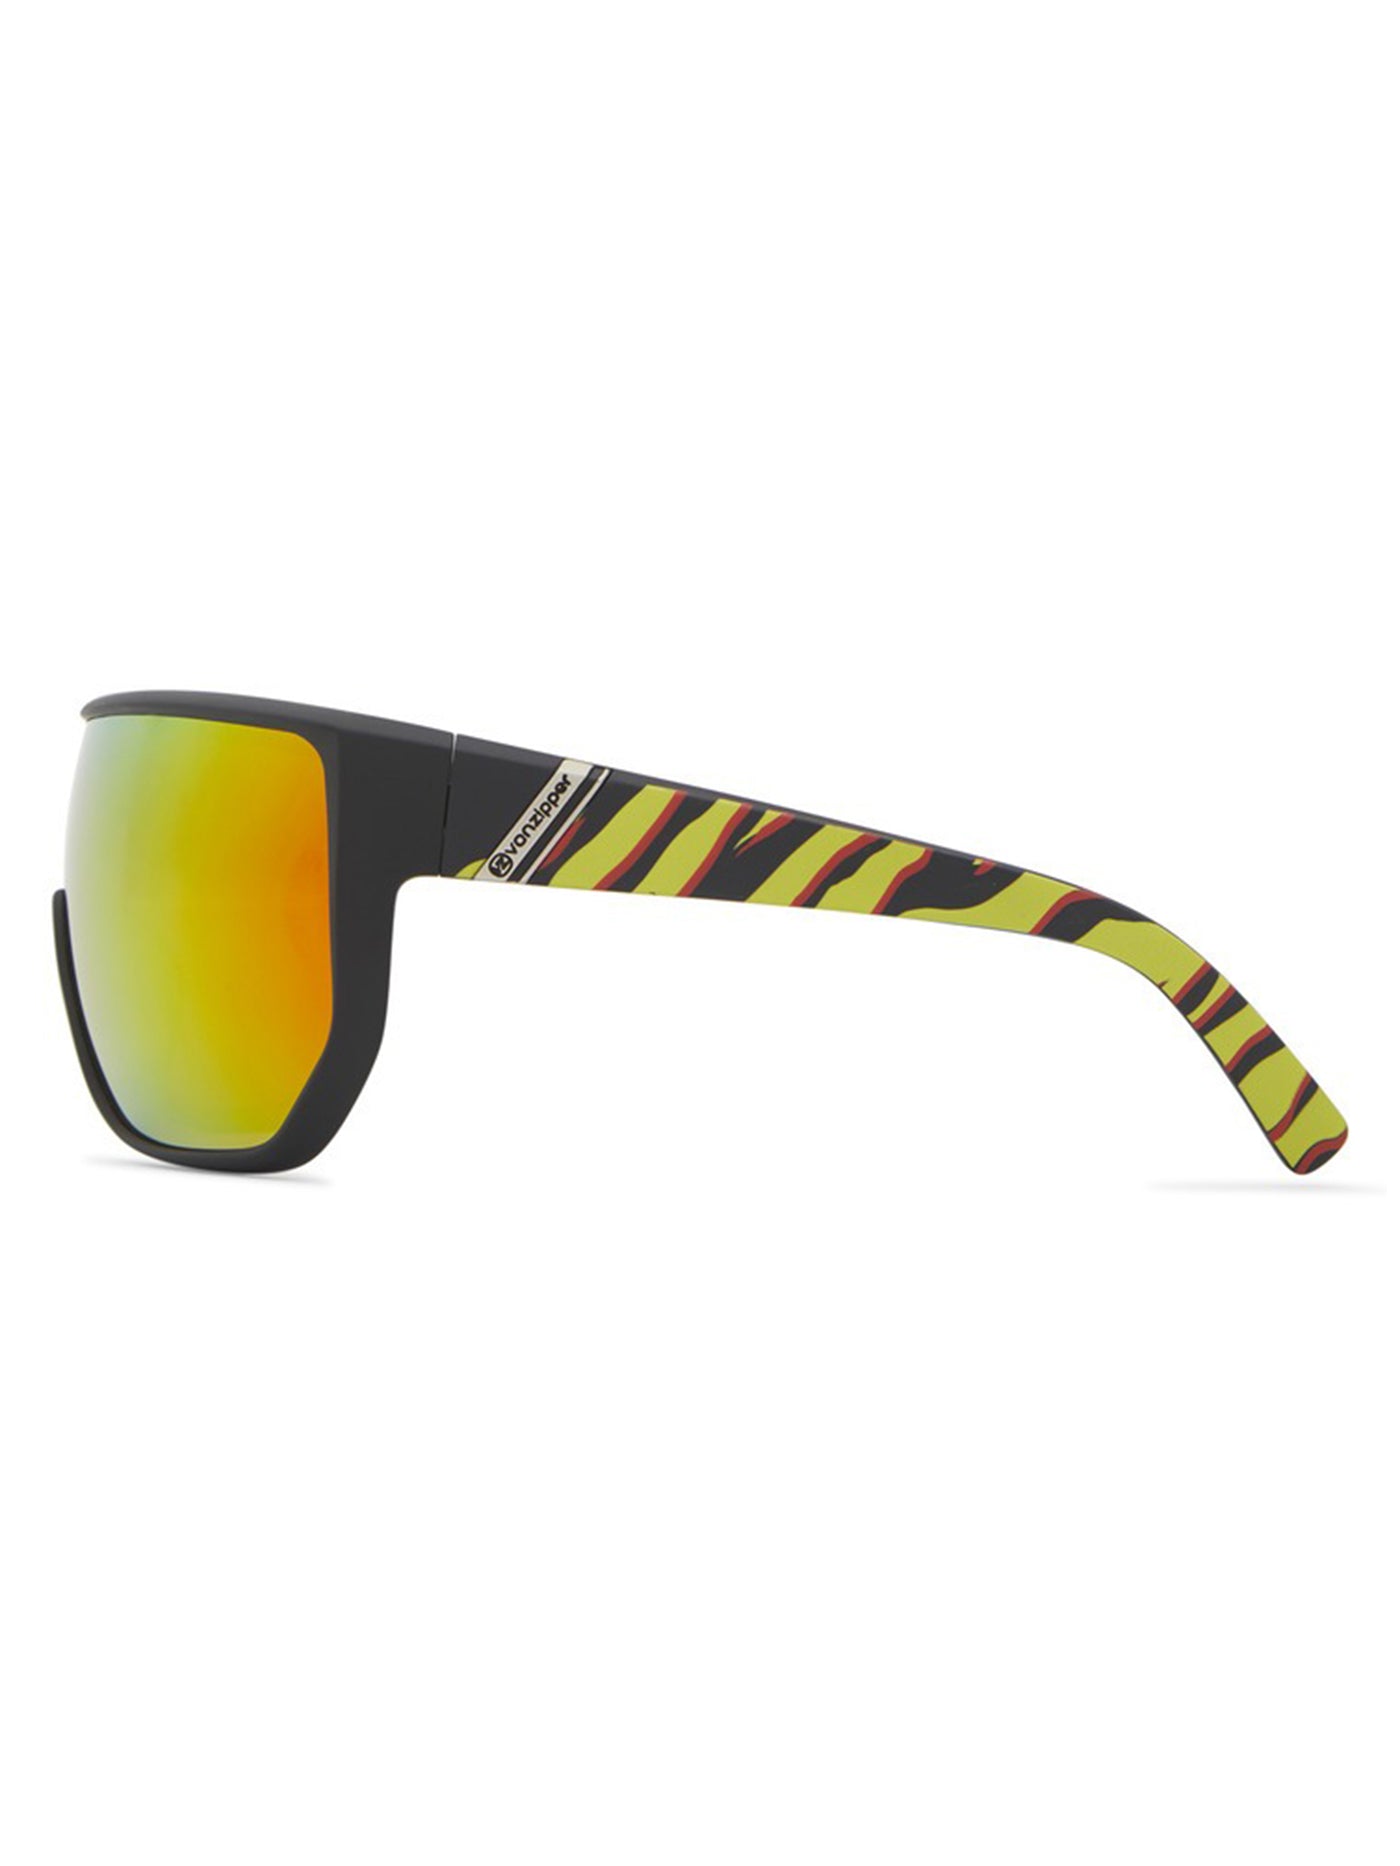 Von Zipper Bionacle Tiger Tear/Fire Chrome Sunglasses